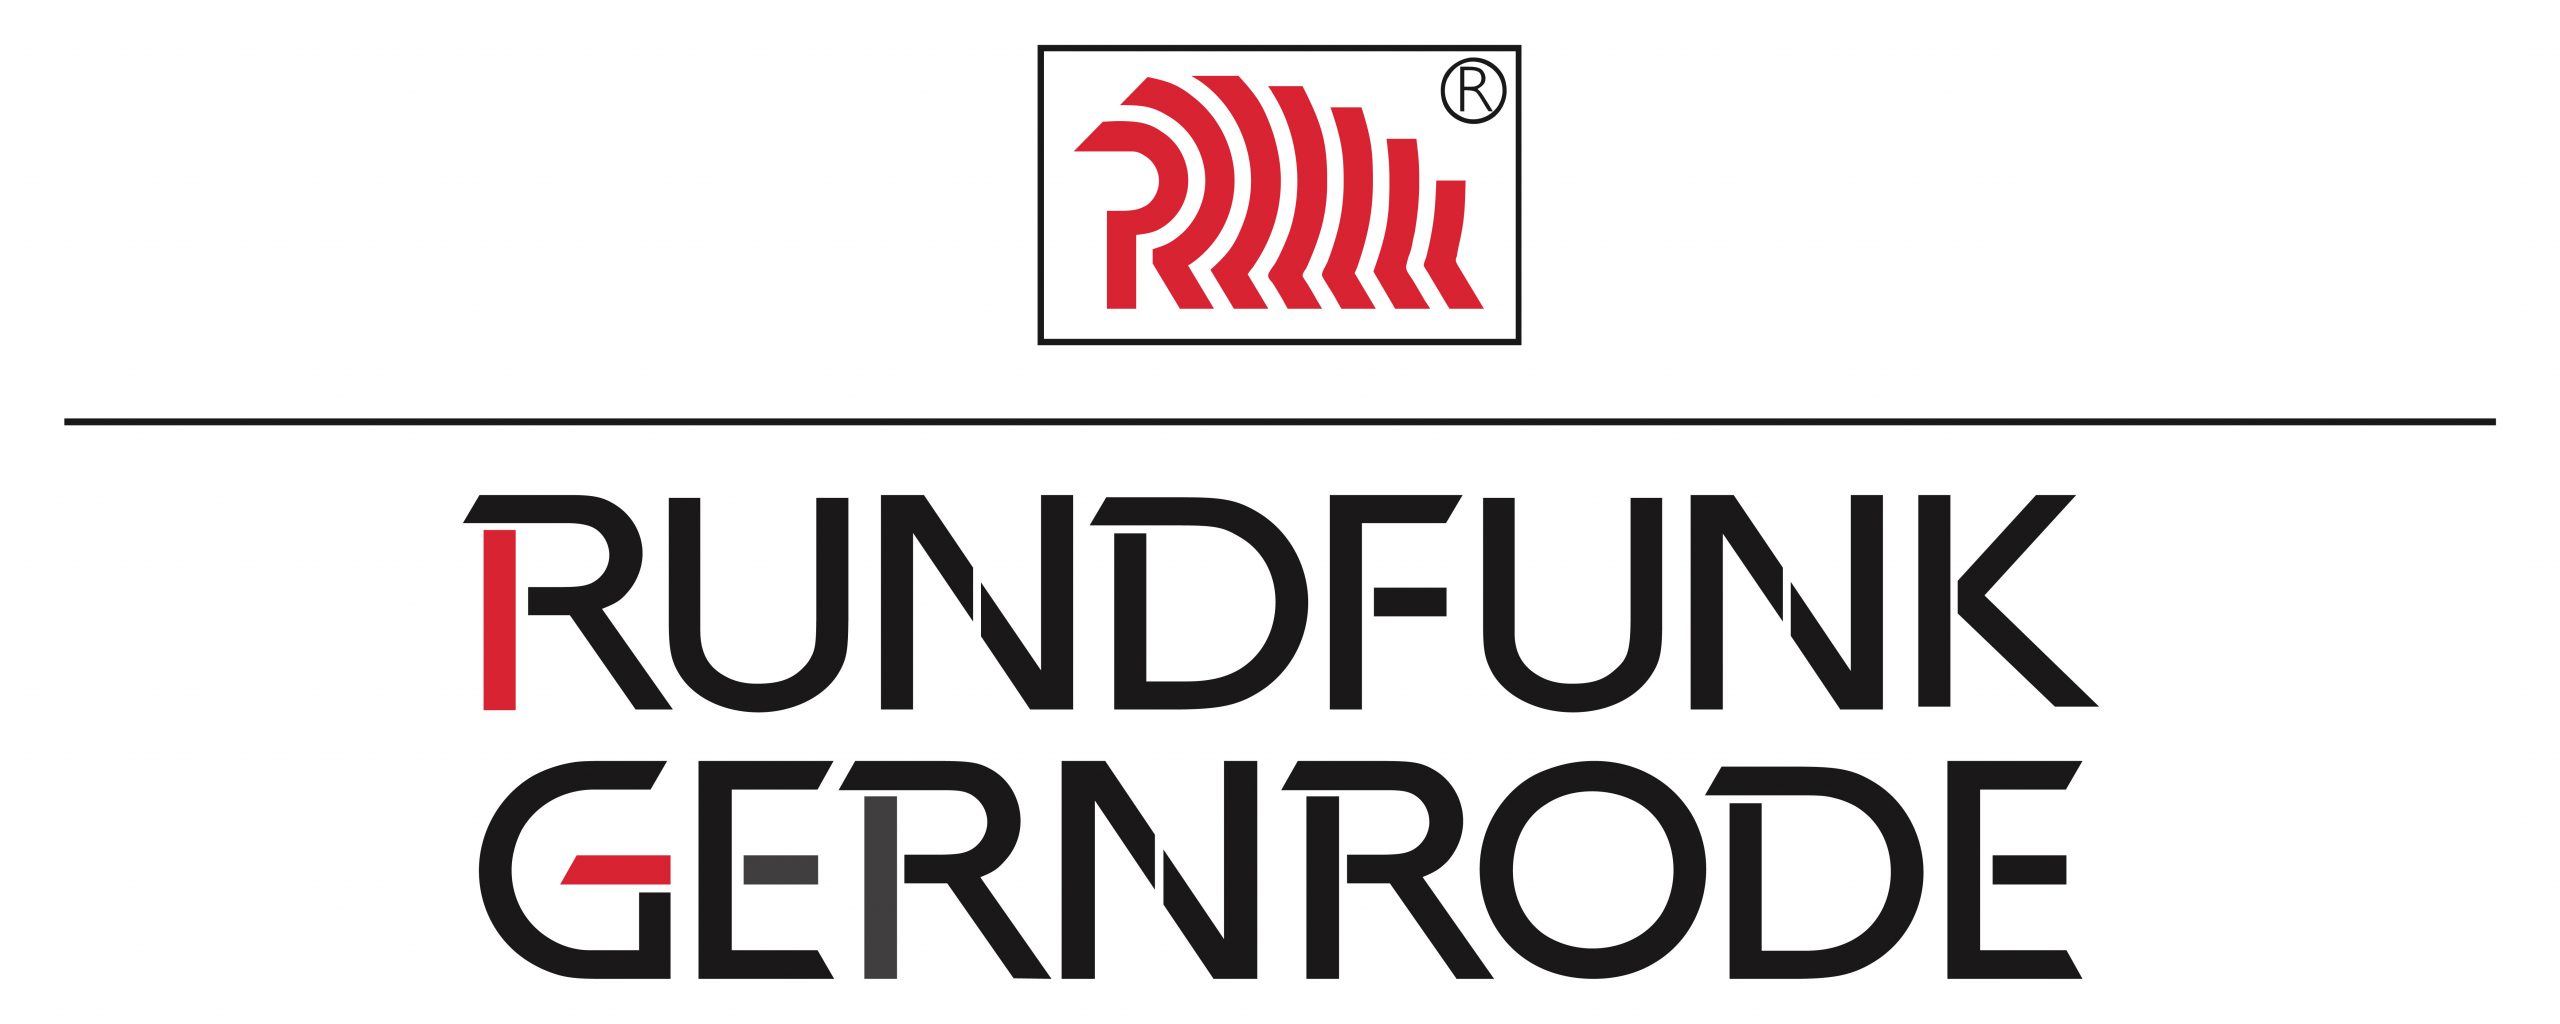 Rundfunk Gernrode GmbH & Co. KG